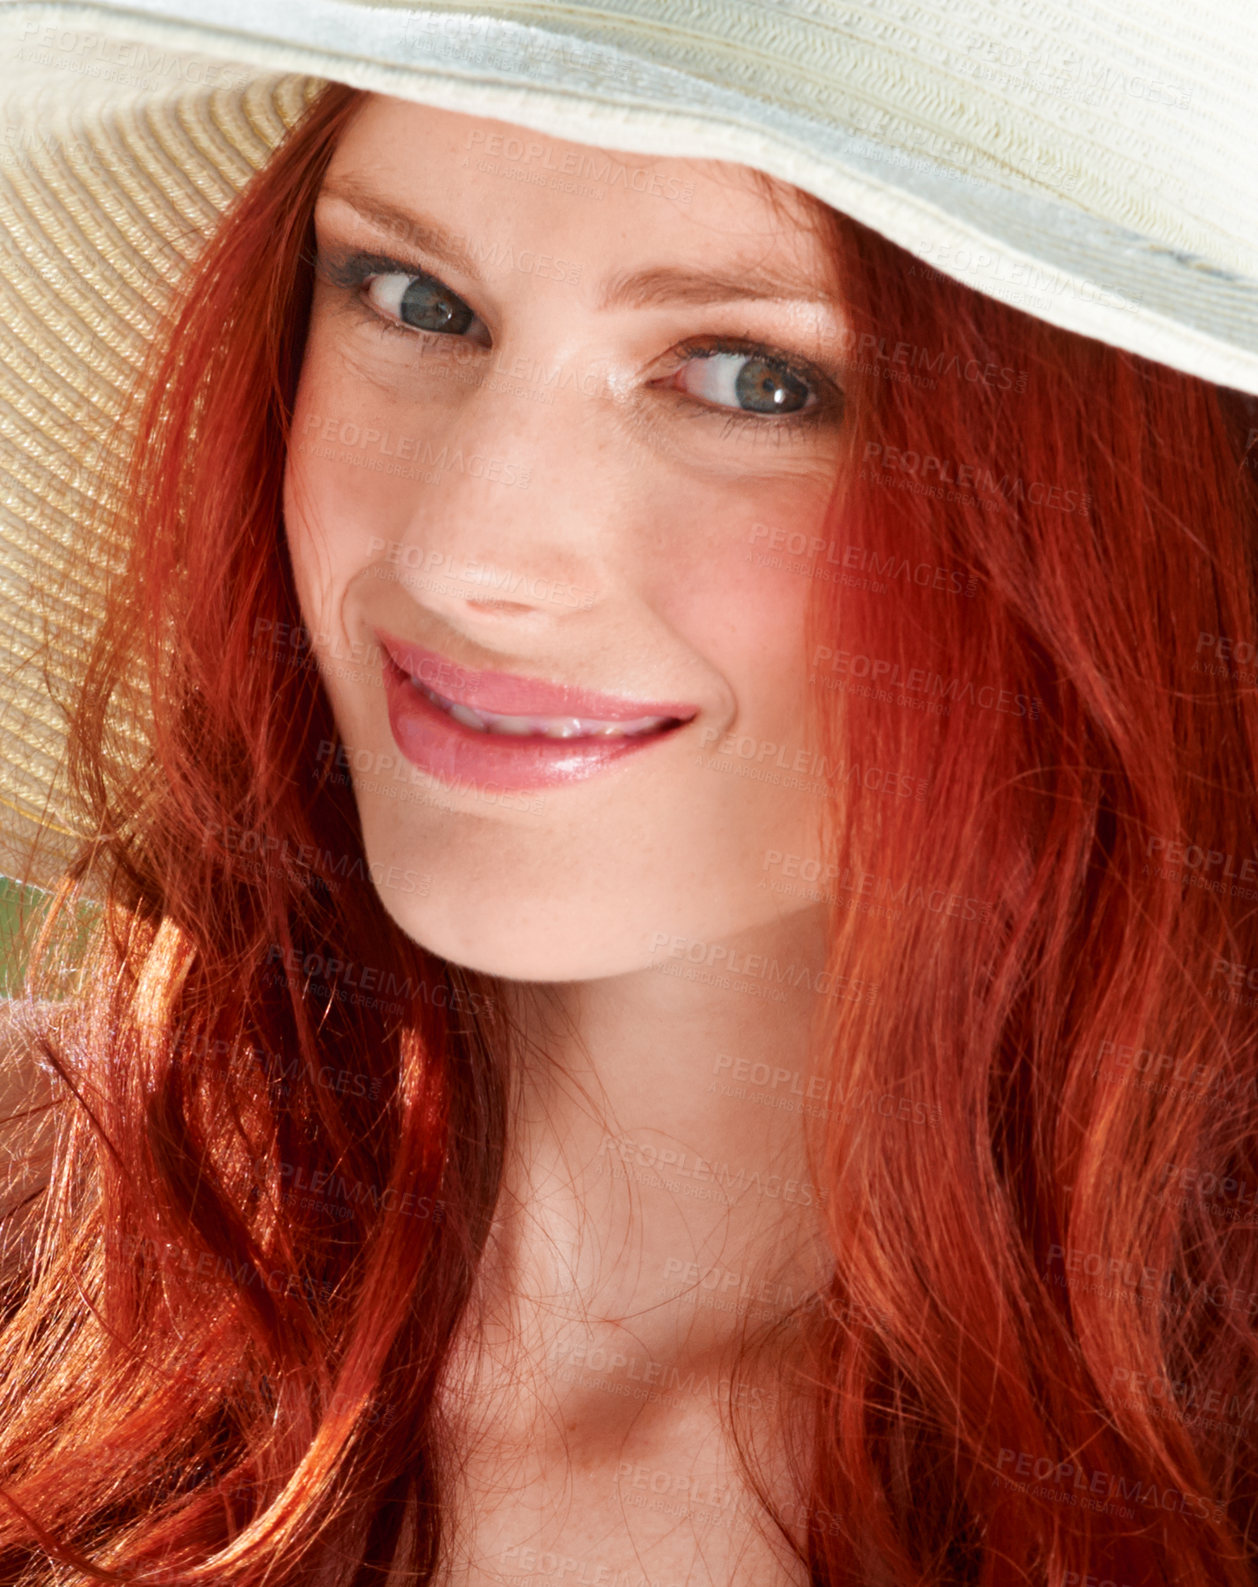 Buy stock photo A young redheade woman wearing a sunhat